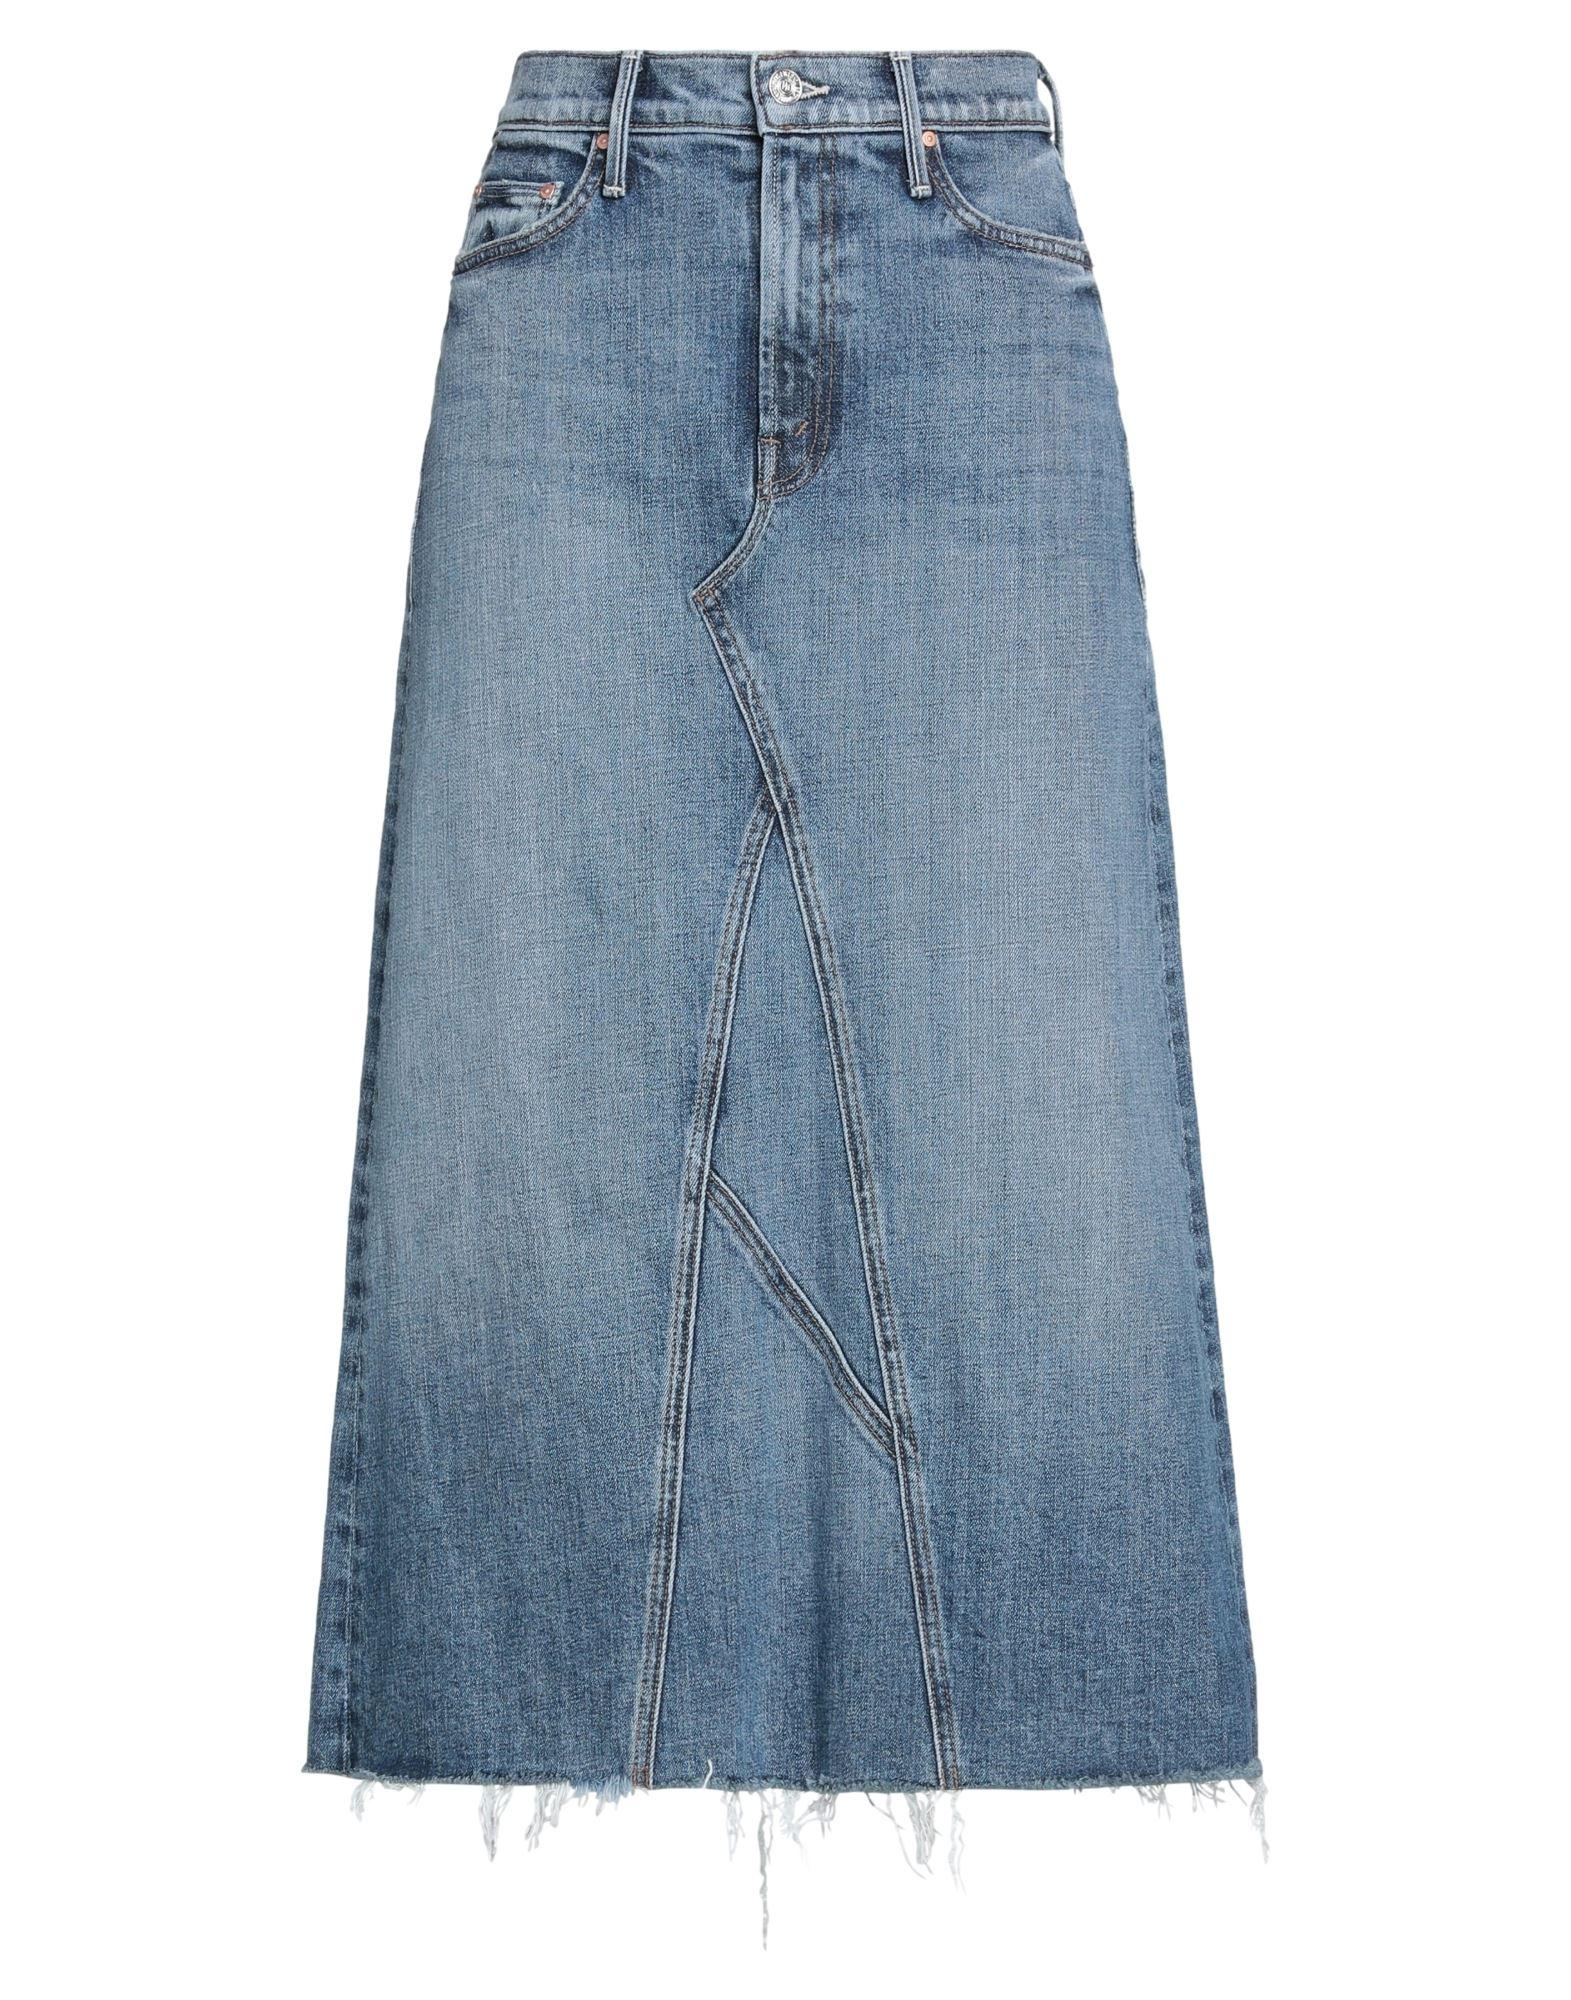 The Vagabond Mini Fray Skirt Mother Denim | eBay